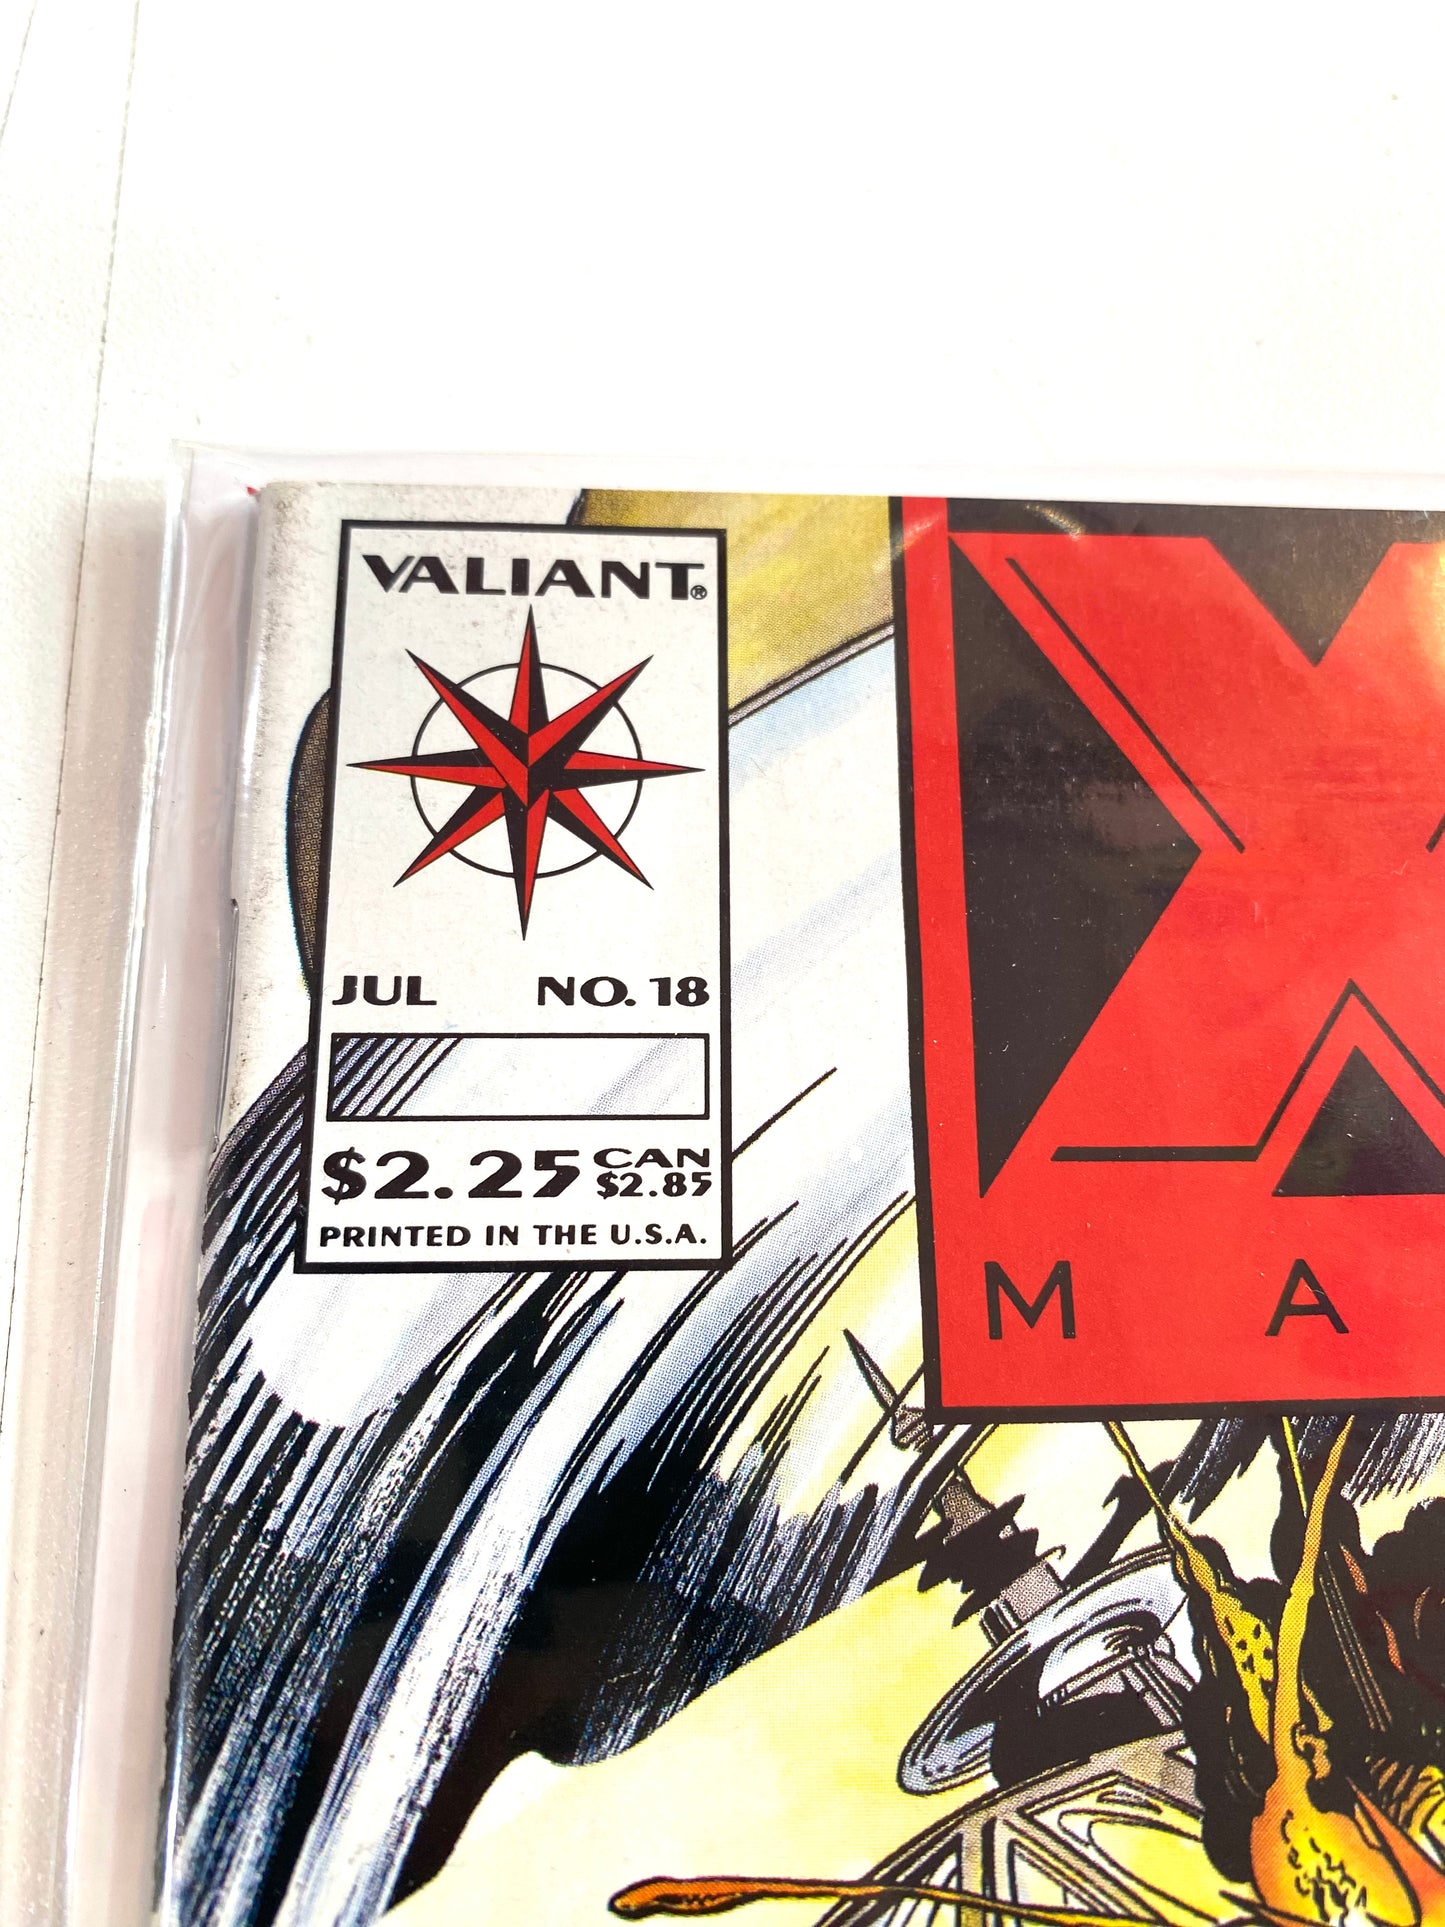 Valiant: X-O Manowar Jul No.18